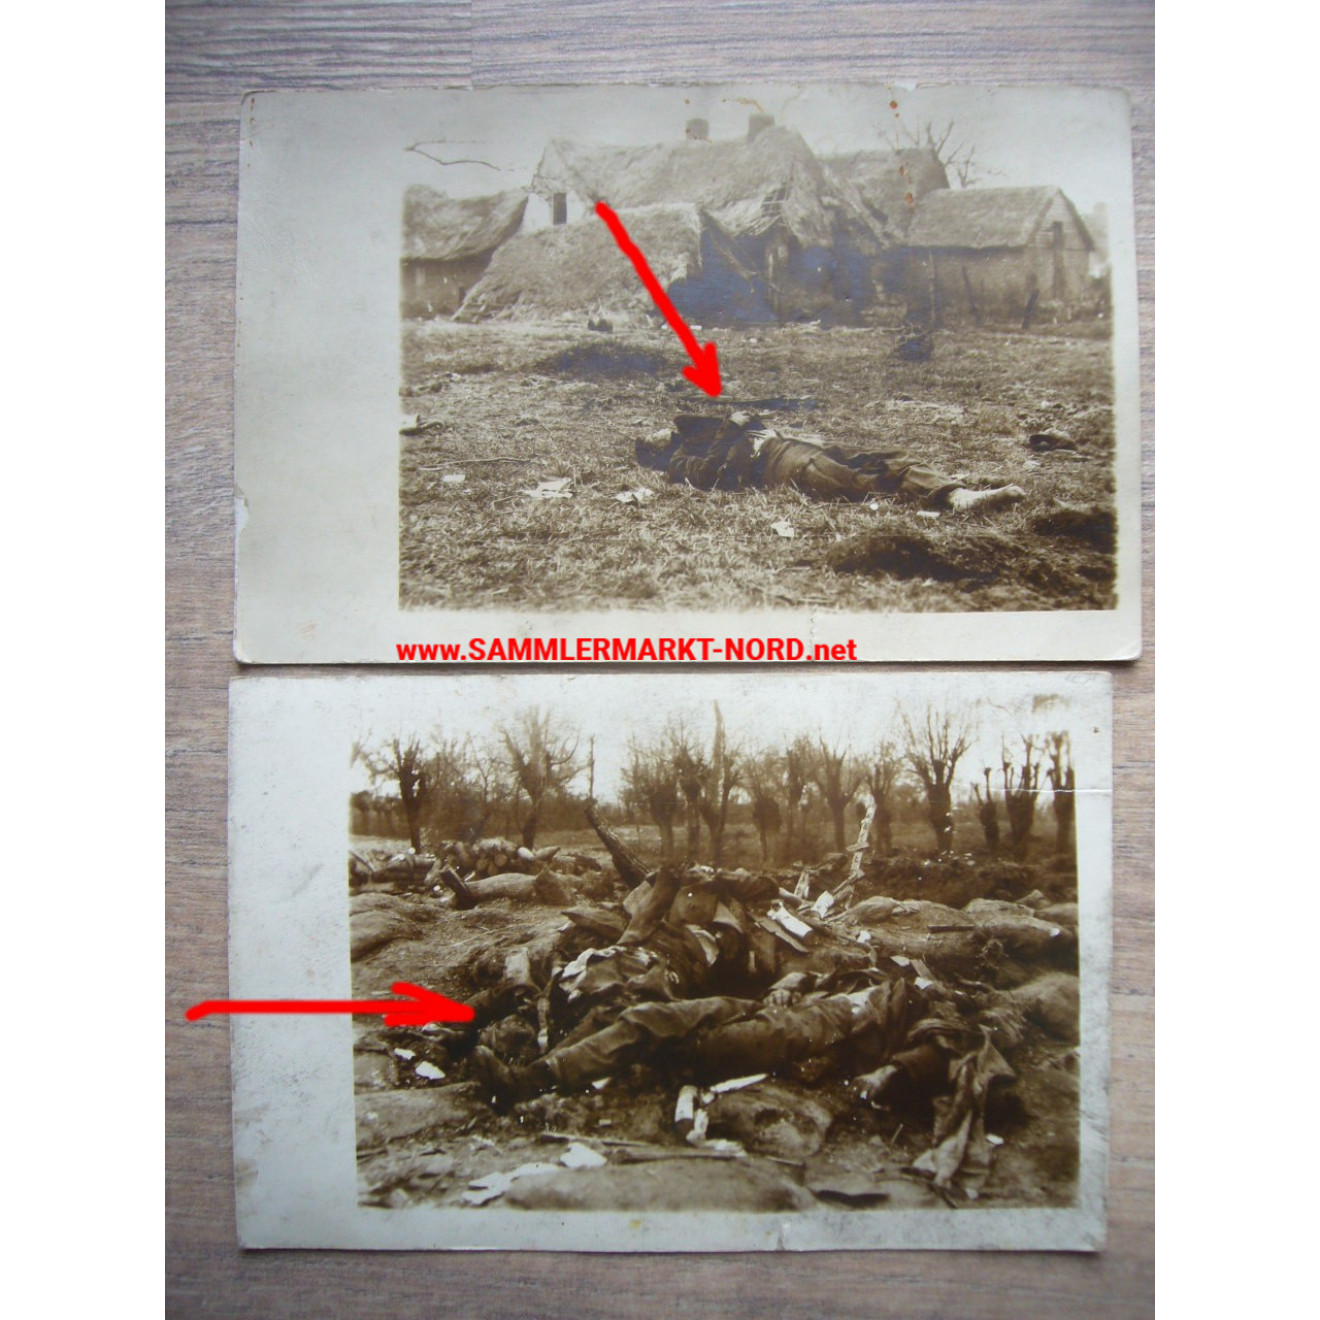 2 x photo 1st World War - dead soldiers on the battlefield